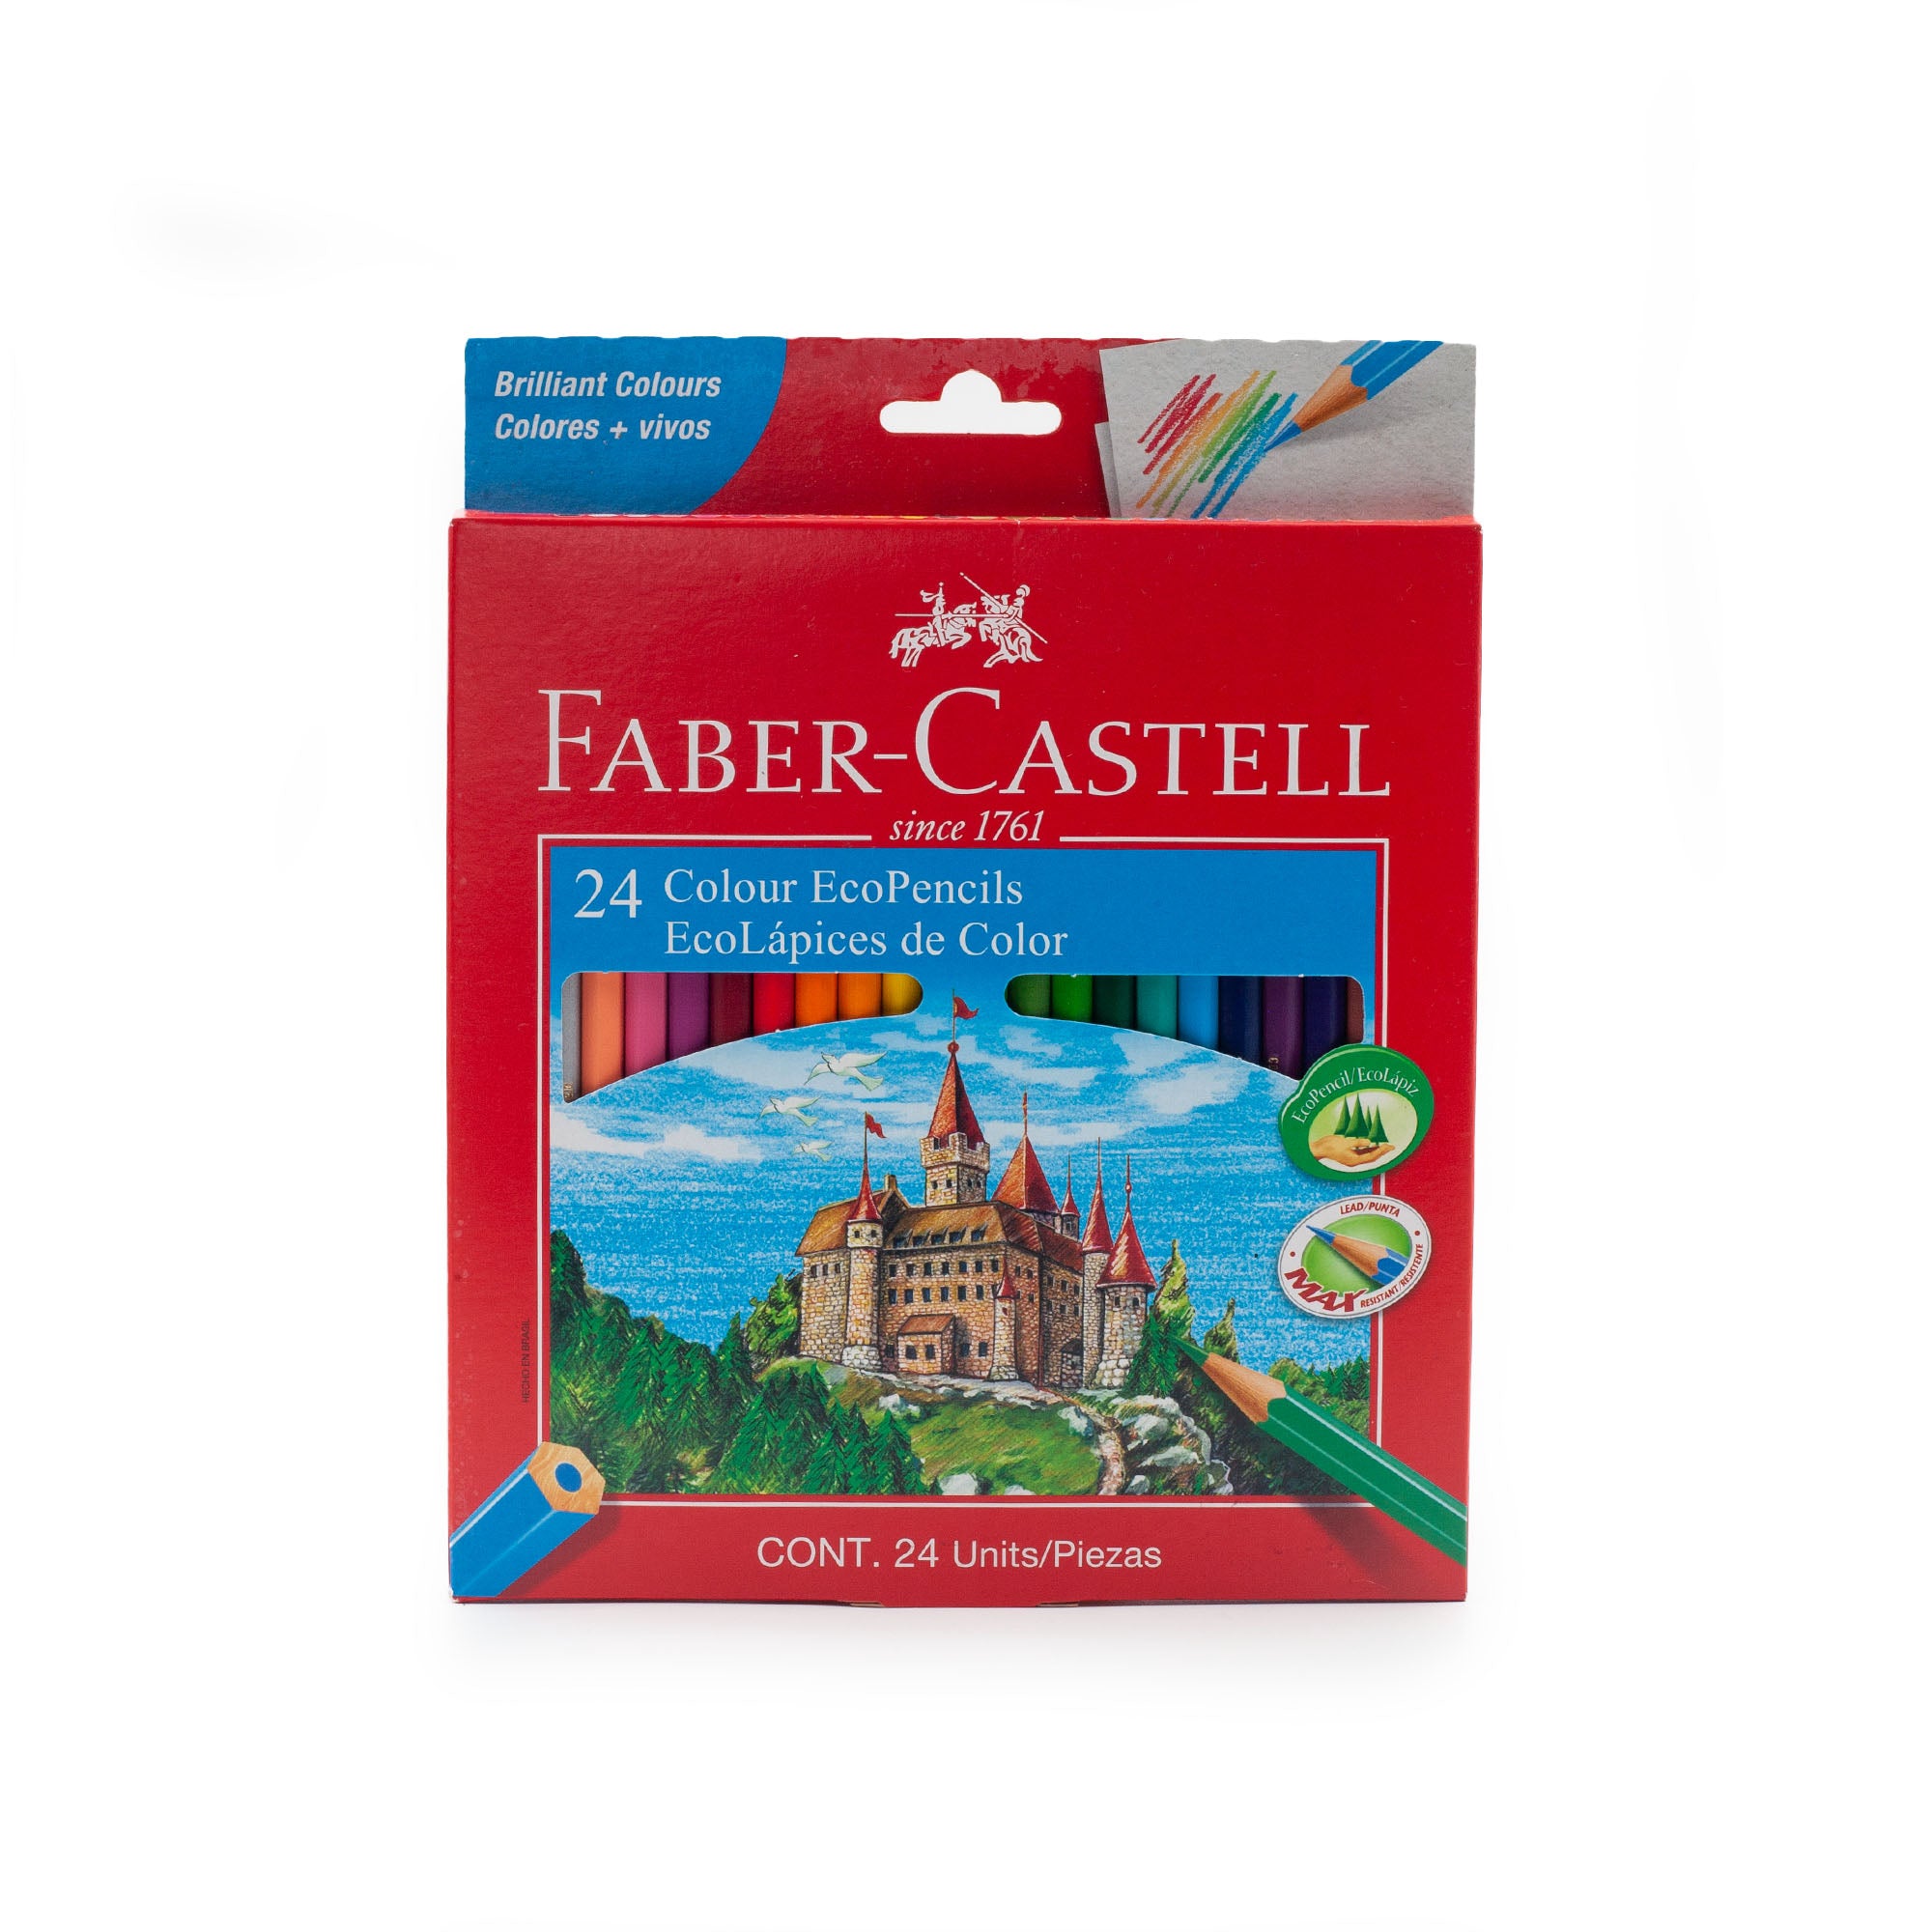 Image shows a set of 24 Faber-Castell colour ecopencils